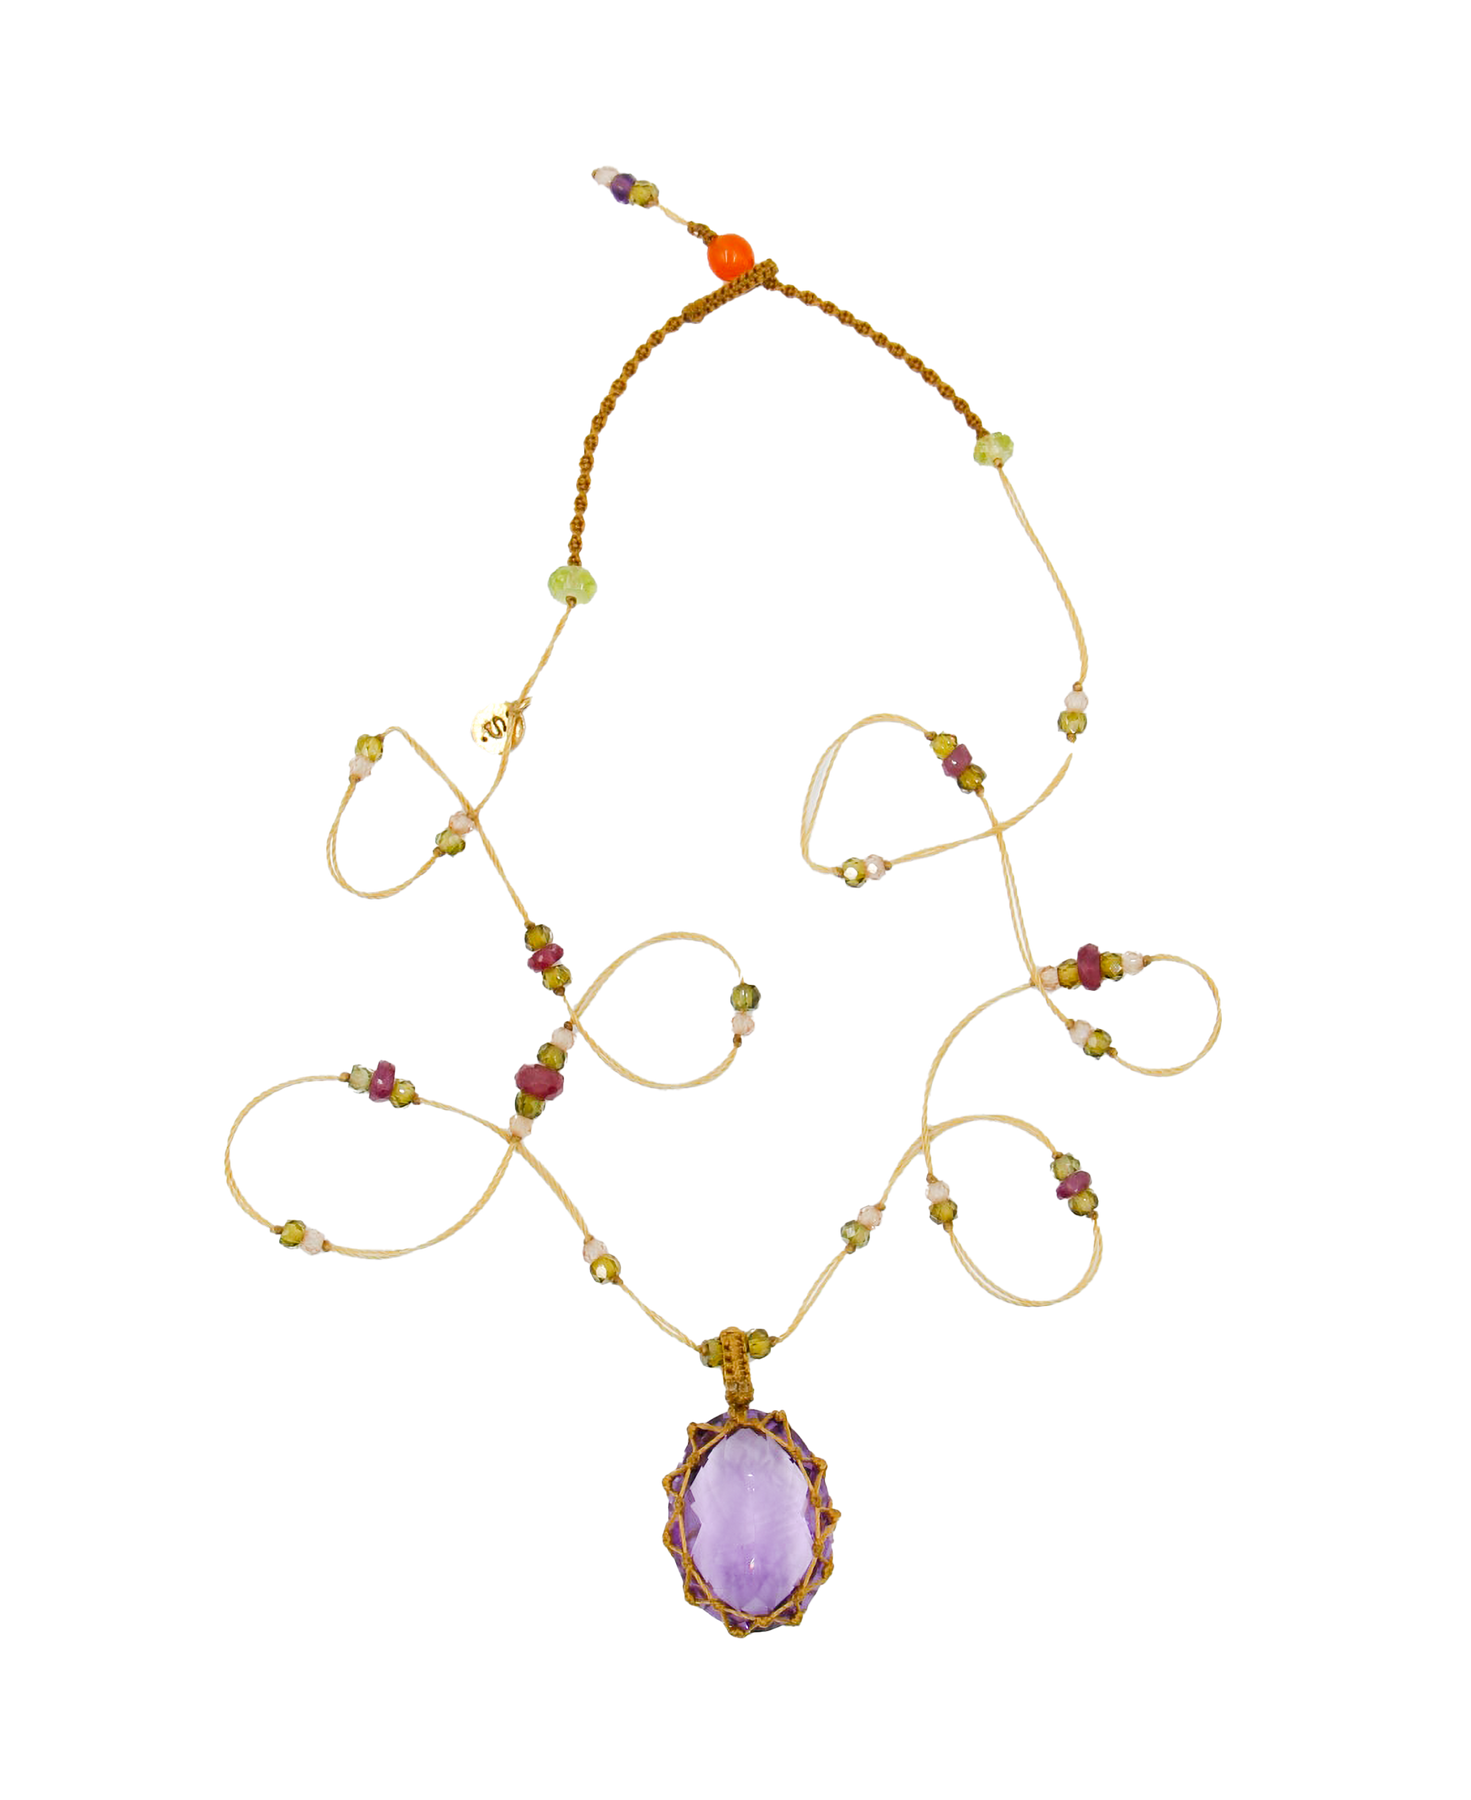 Short Tibetan Necklace - Light Violet Amethyst - Mix Pink Tourmaline - Beige Thread